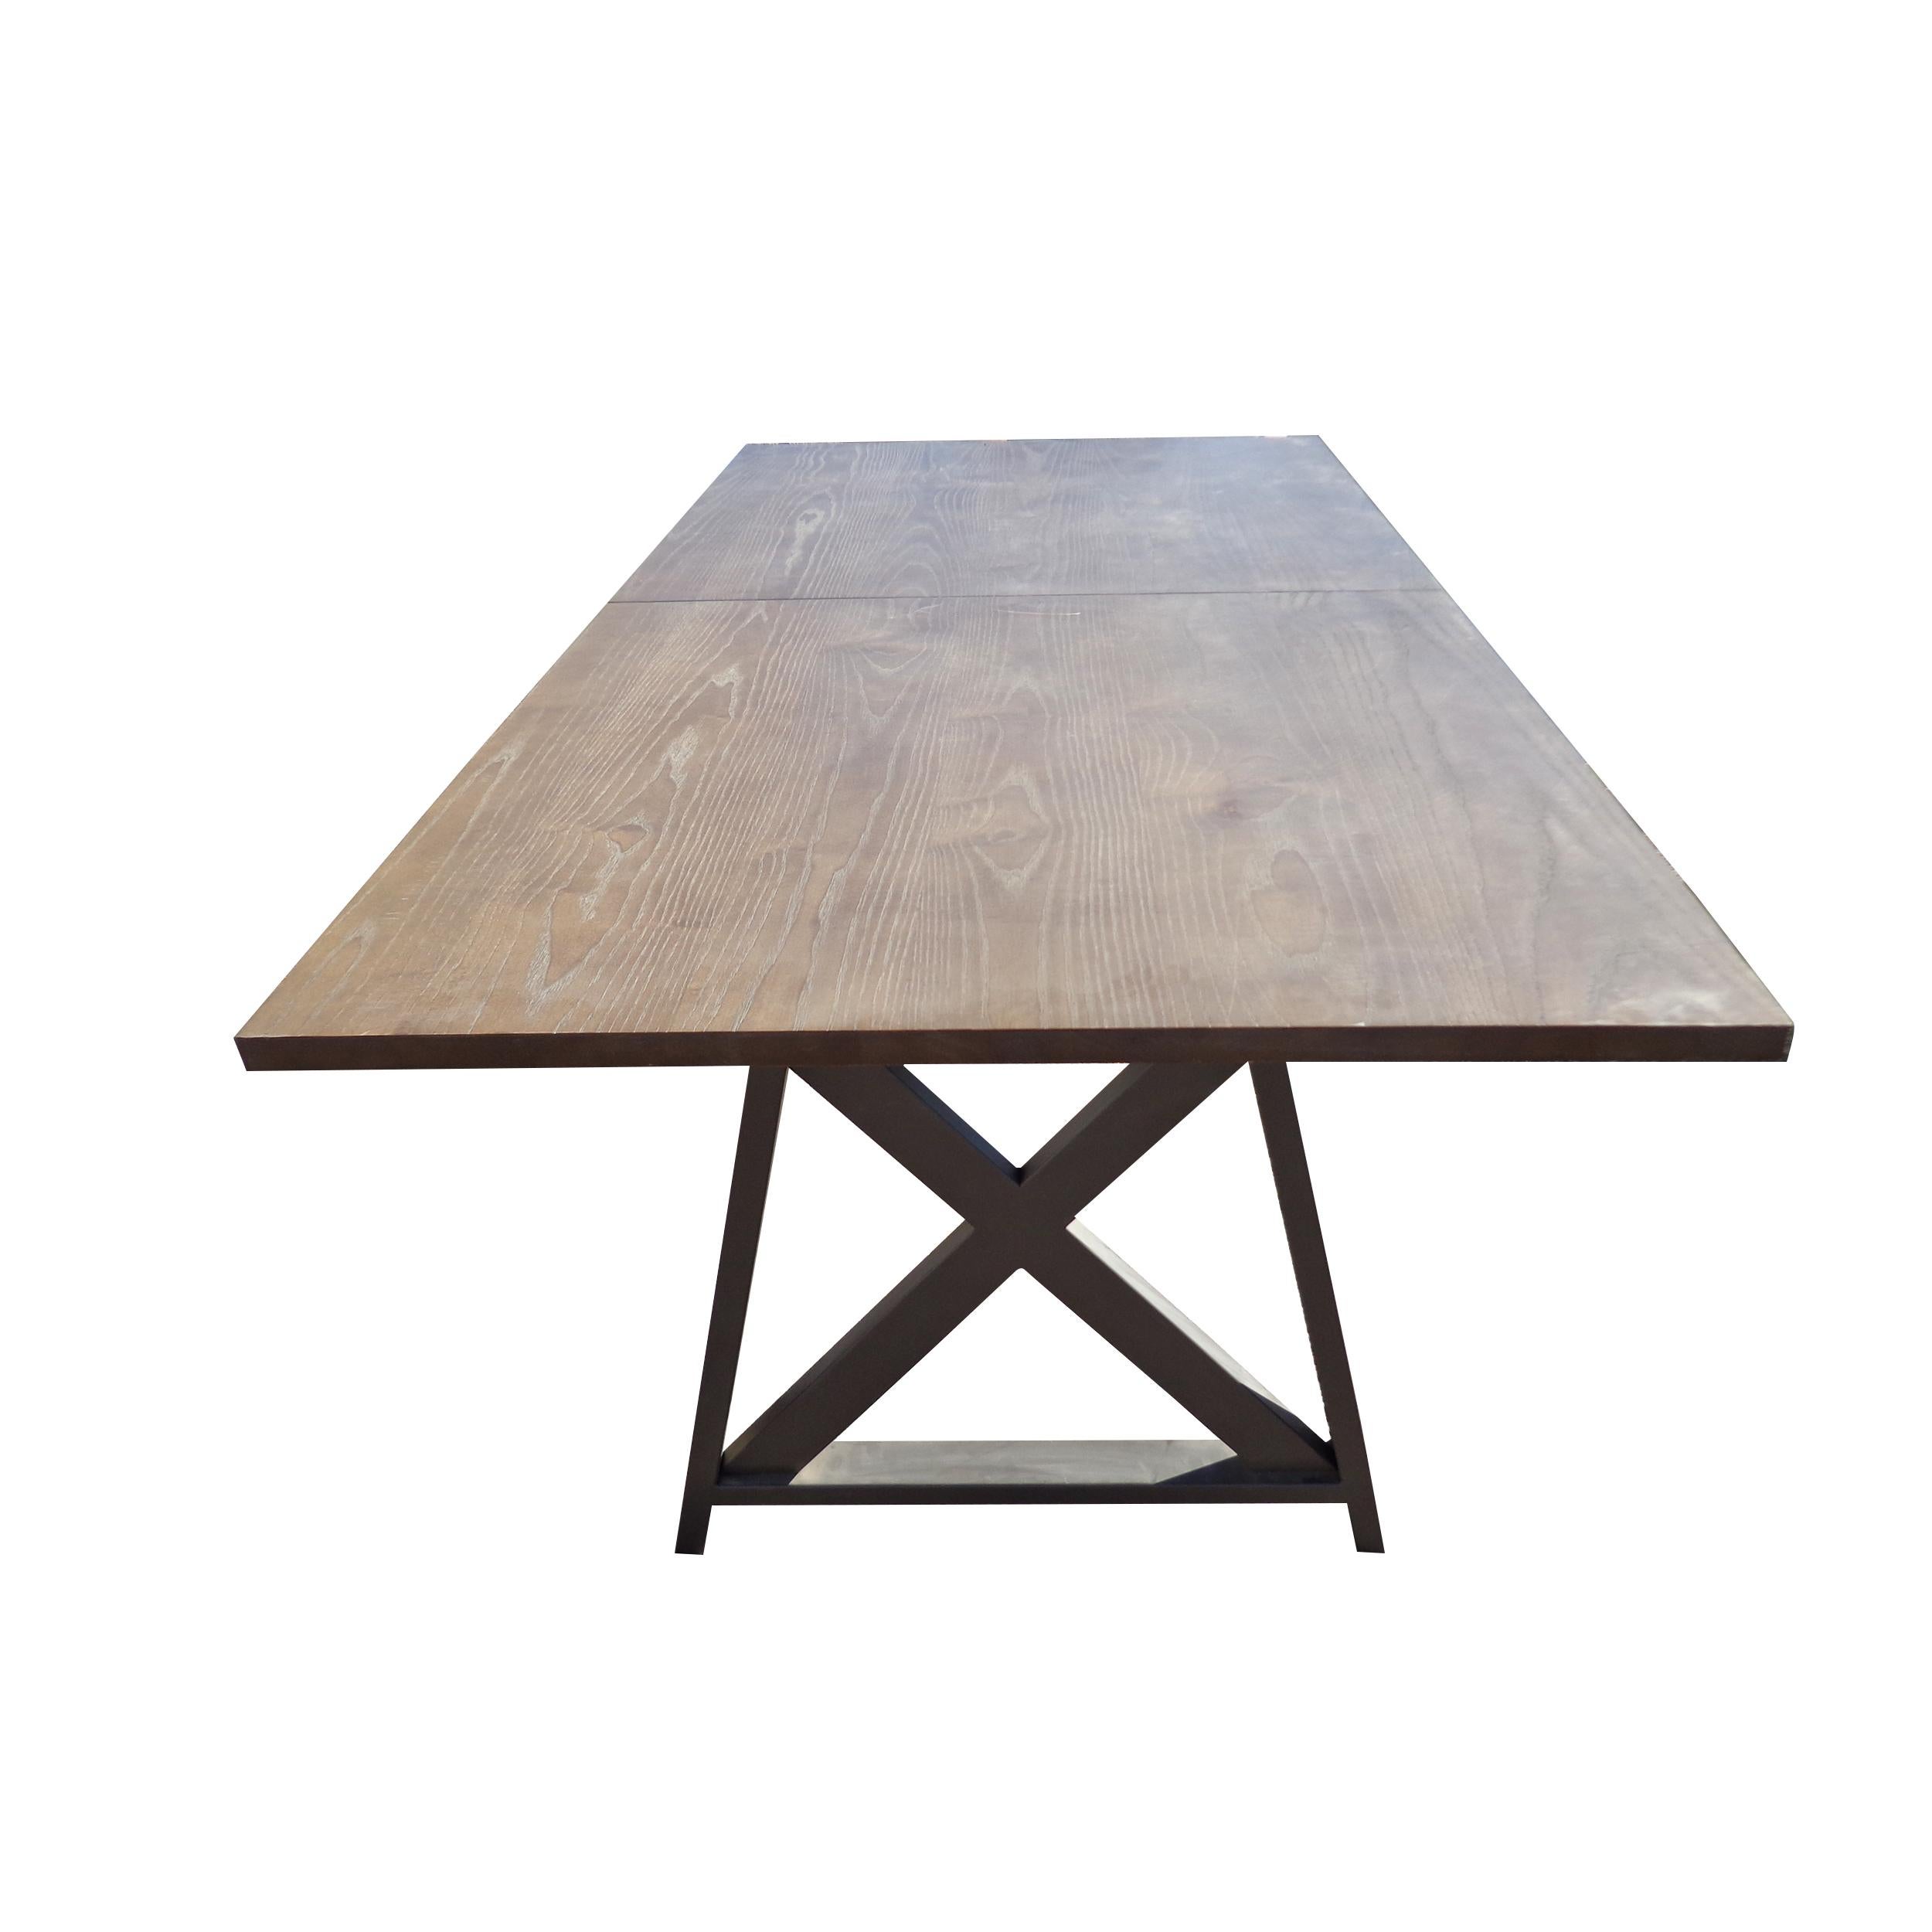 North American Industrial Trestle Base Work Table Desk For Sale